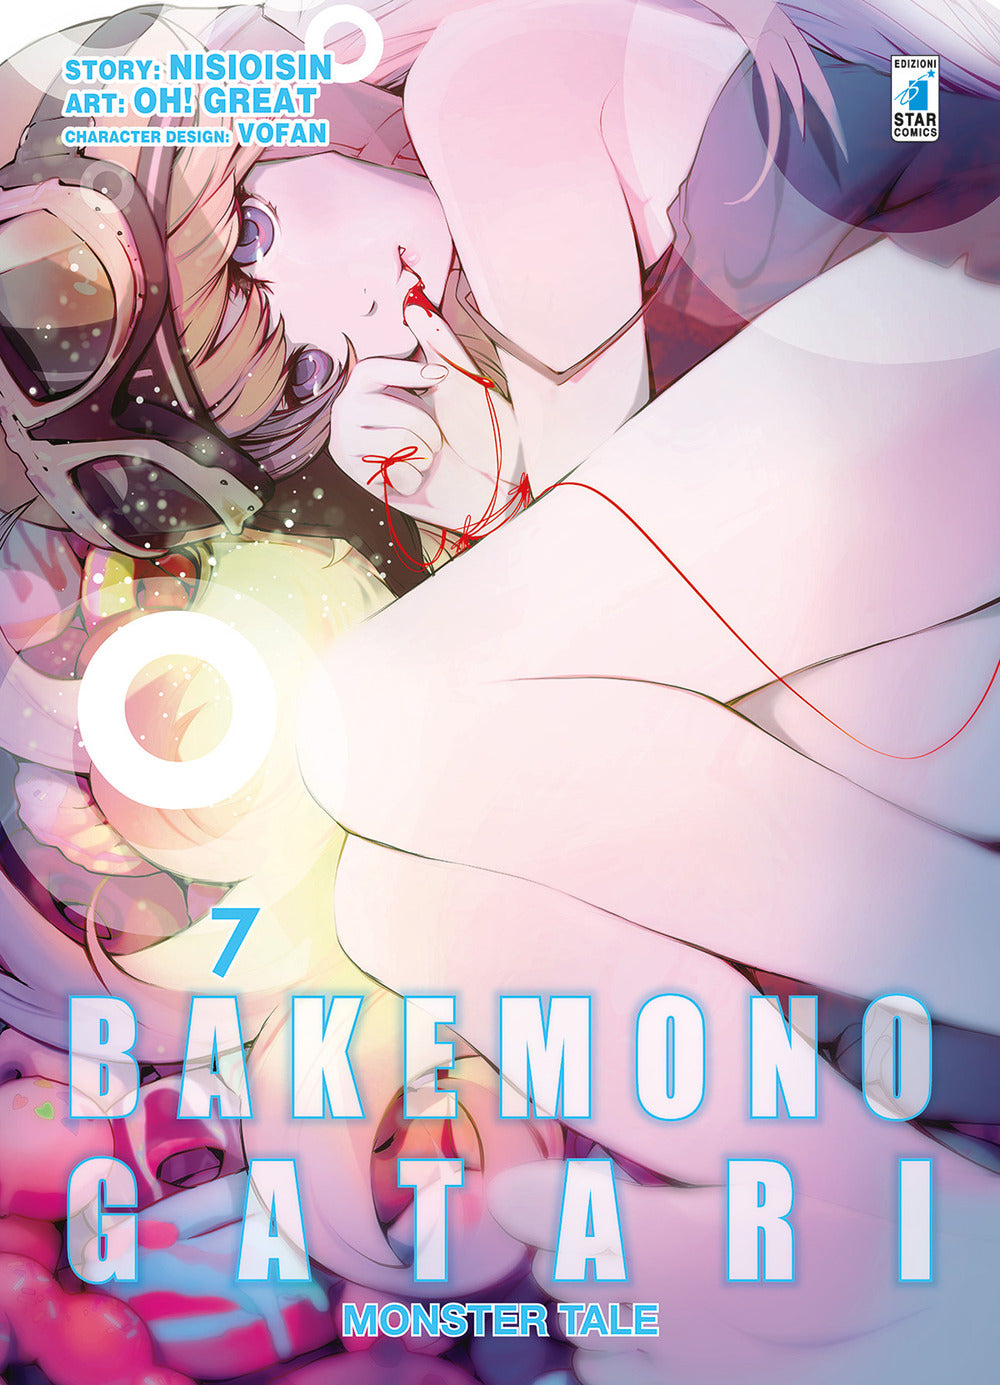 Bakemonogatari. Monster tale. Vol. 7